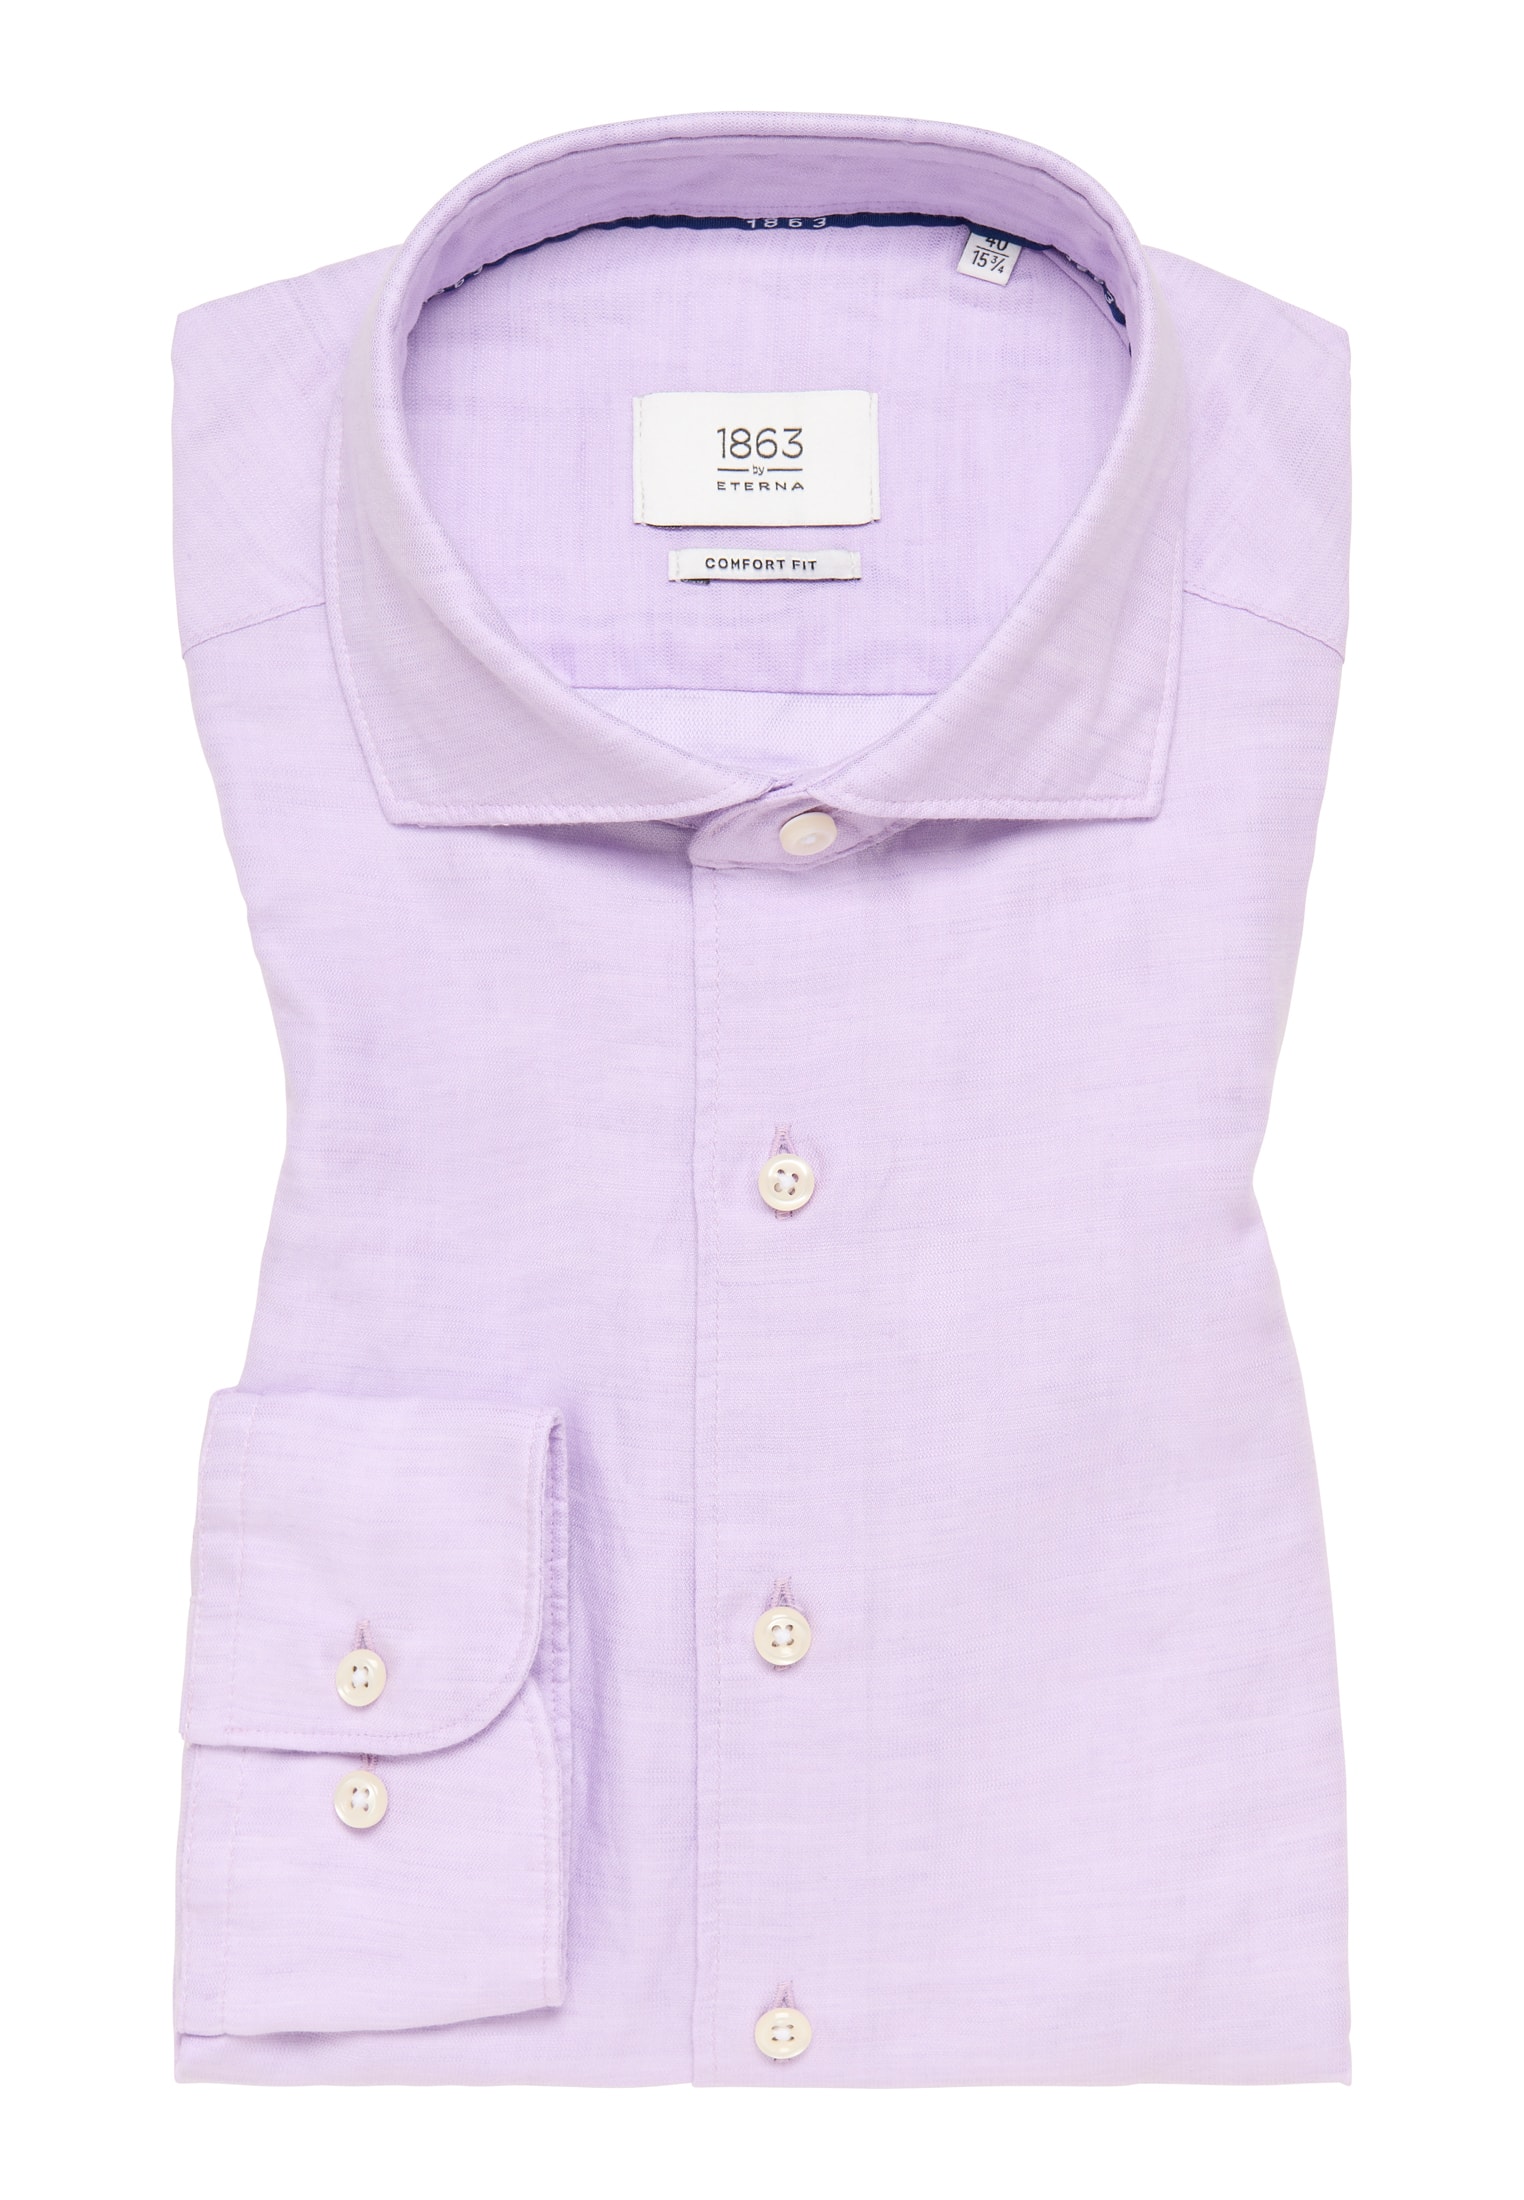 lavender Linen Shirt Langarm unifarben | FIT | COMFORT 1SH00625-09-11-46-1/1 in 46 lavender | |